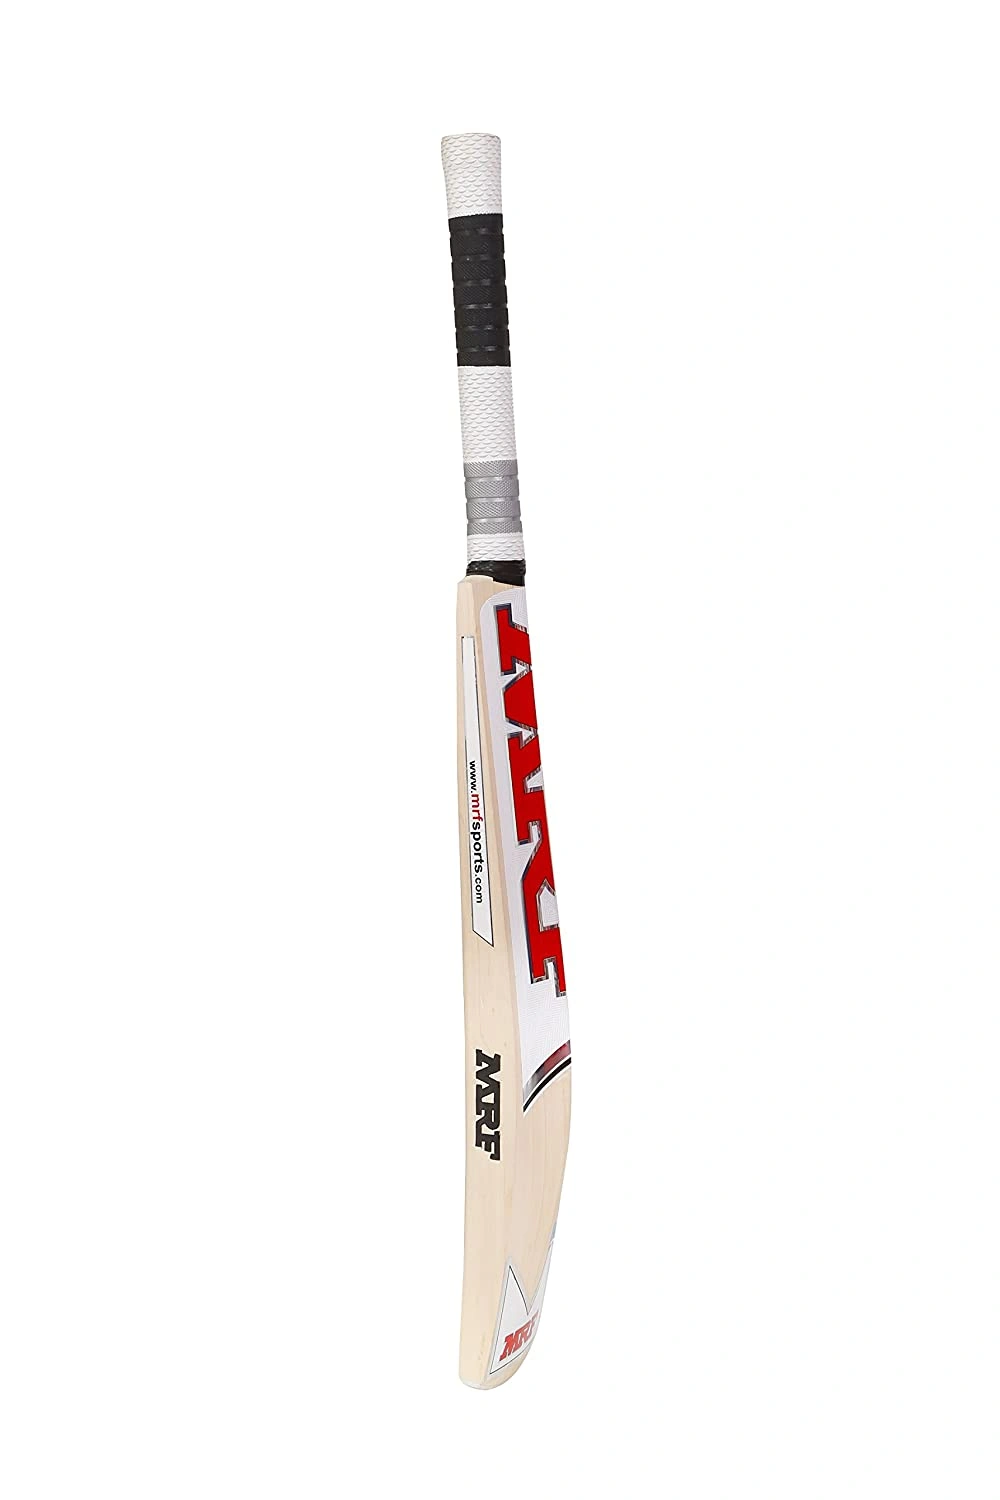 MRF English Willow Warrior Cricket Bat-SH-2